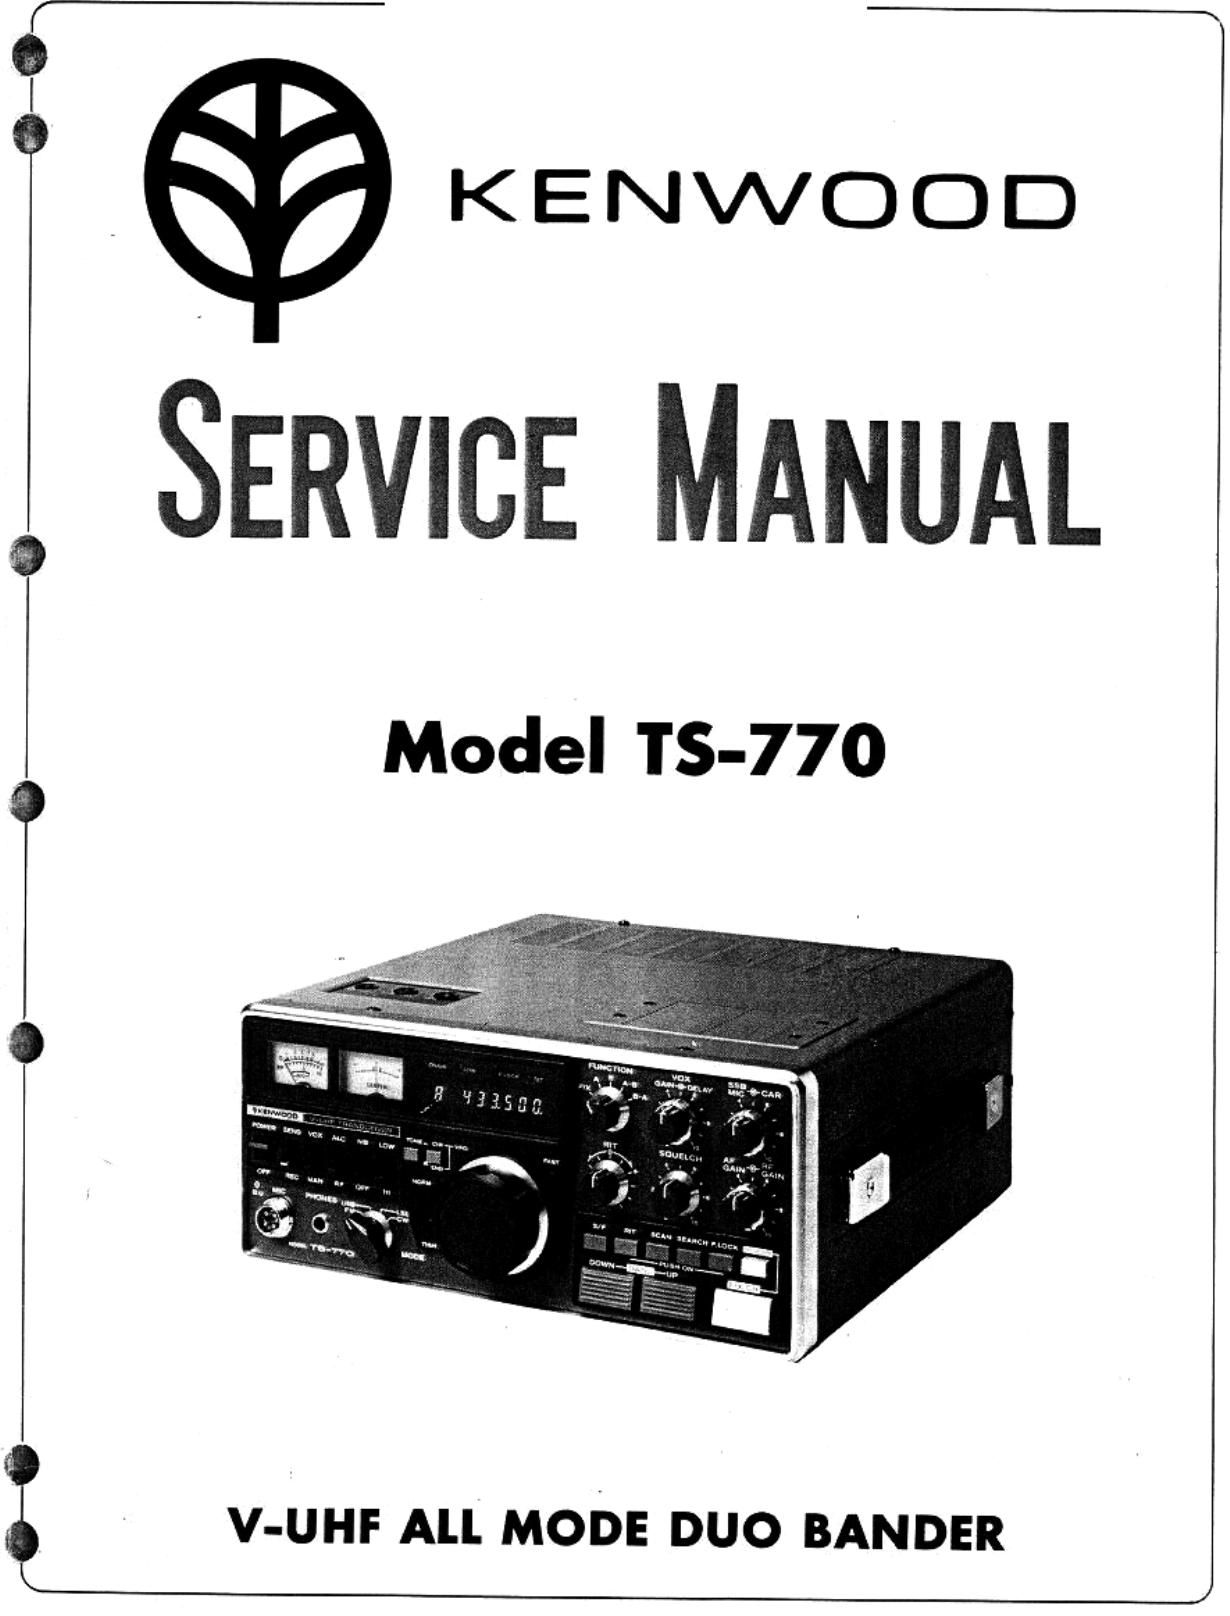 Kenwood TS 770 Service Manual